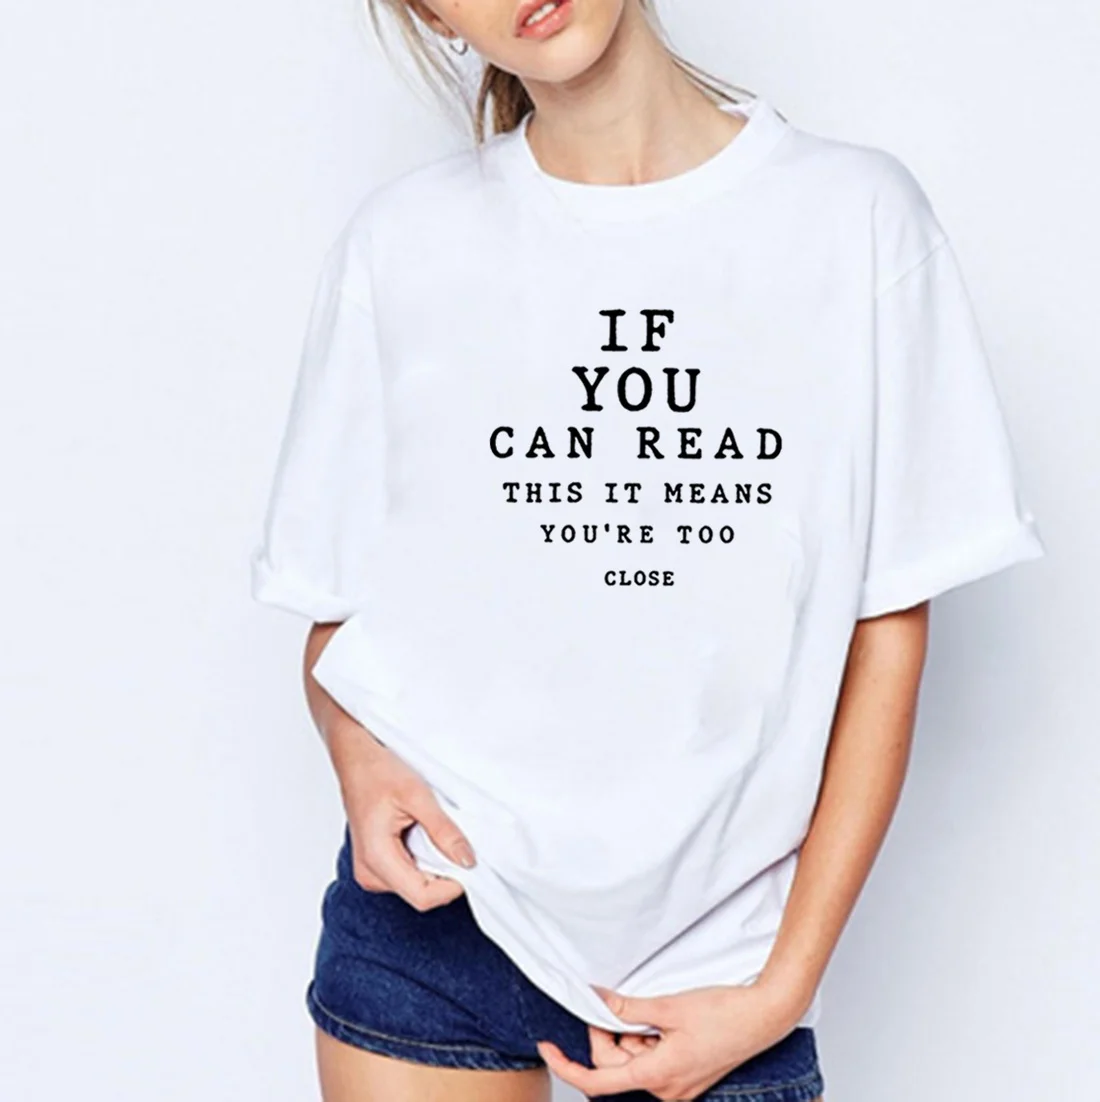 

Женская футболка с надписью If You Can Read, женская футболка с коротким рукавом